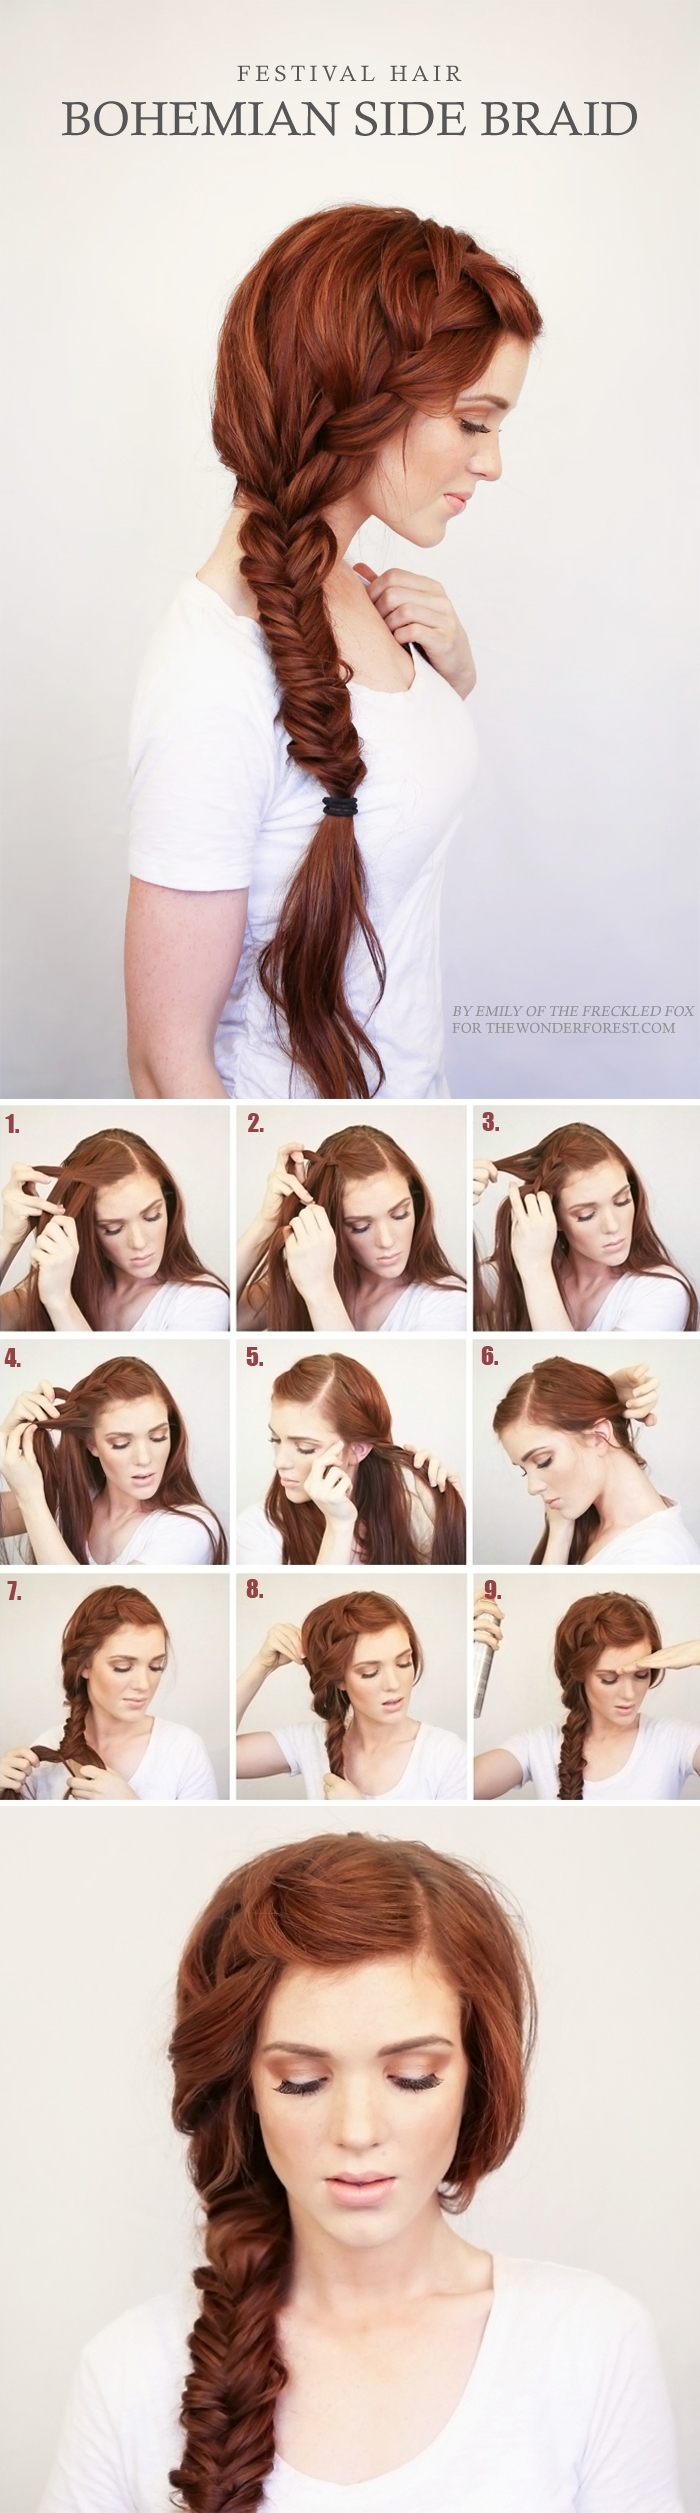 7 Easy Hair Tutorials You Can Totally DIY